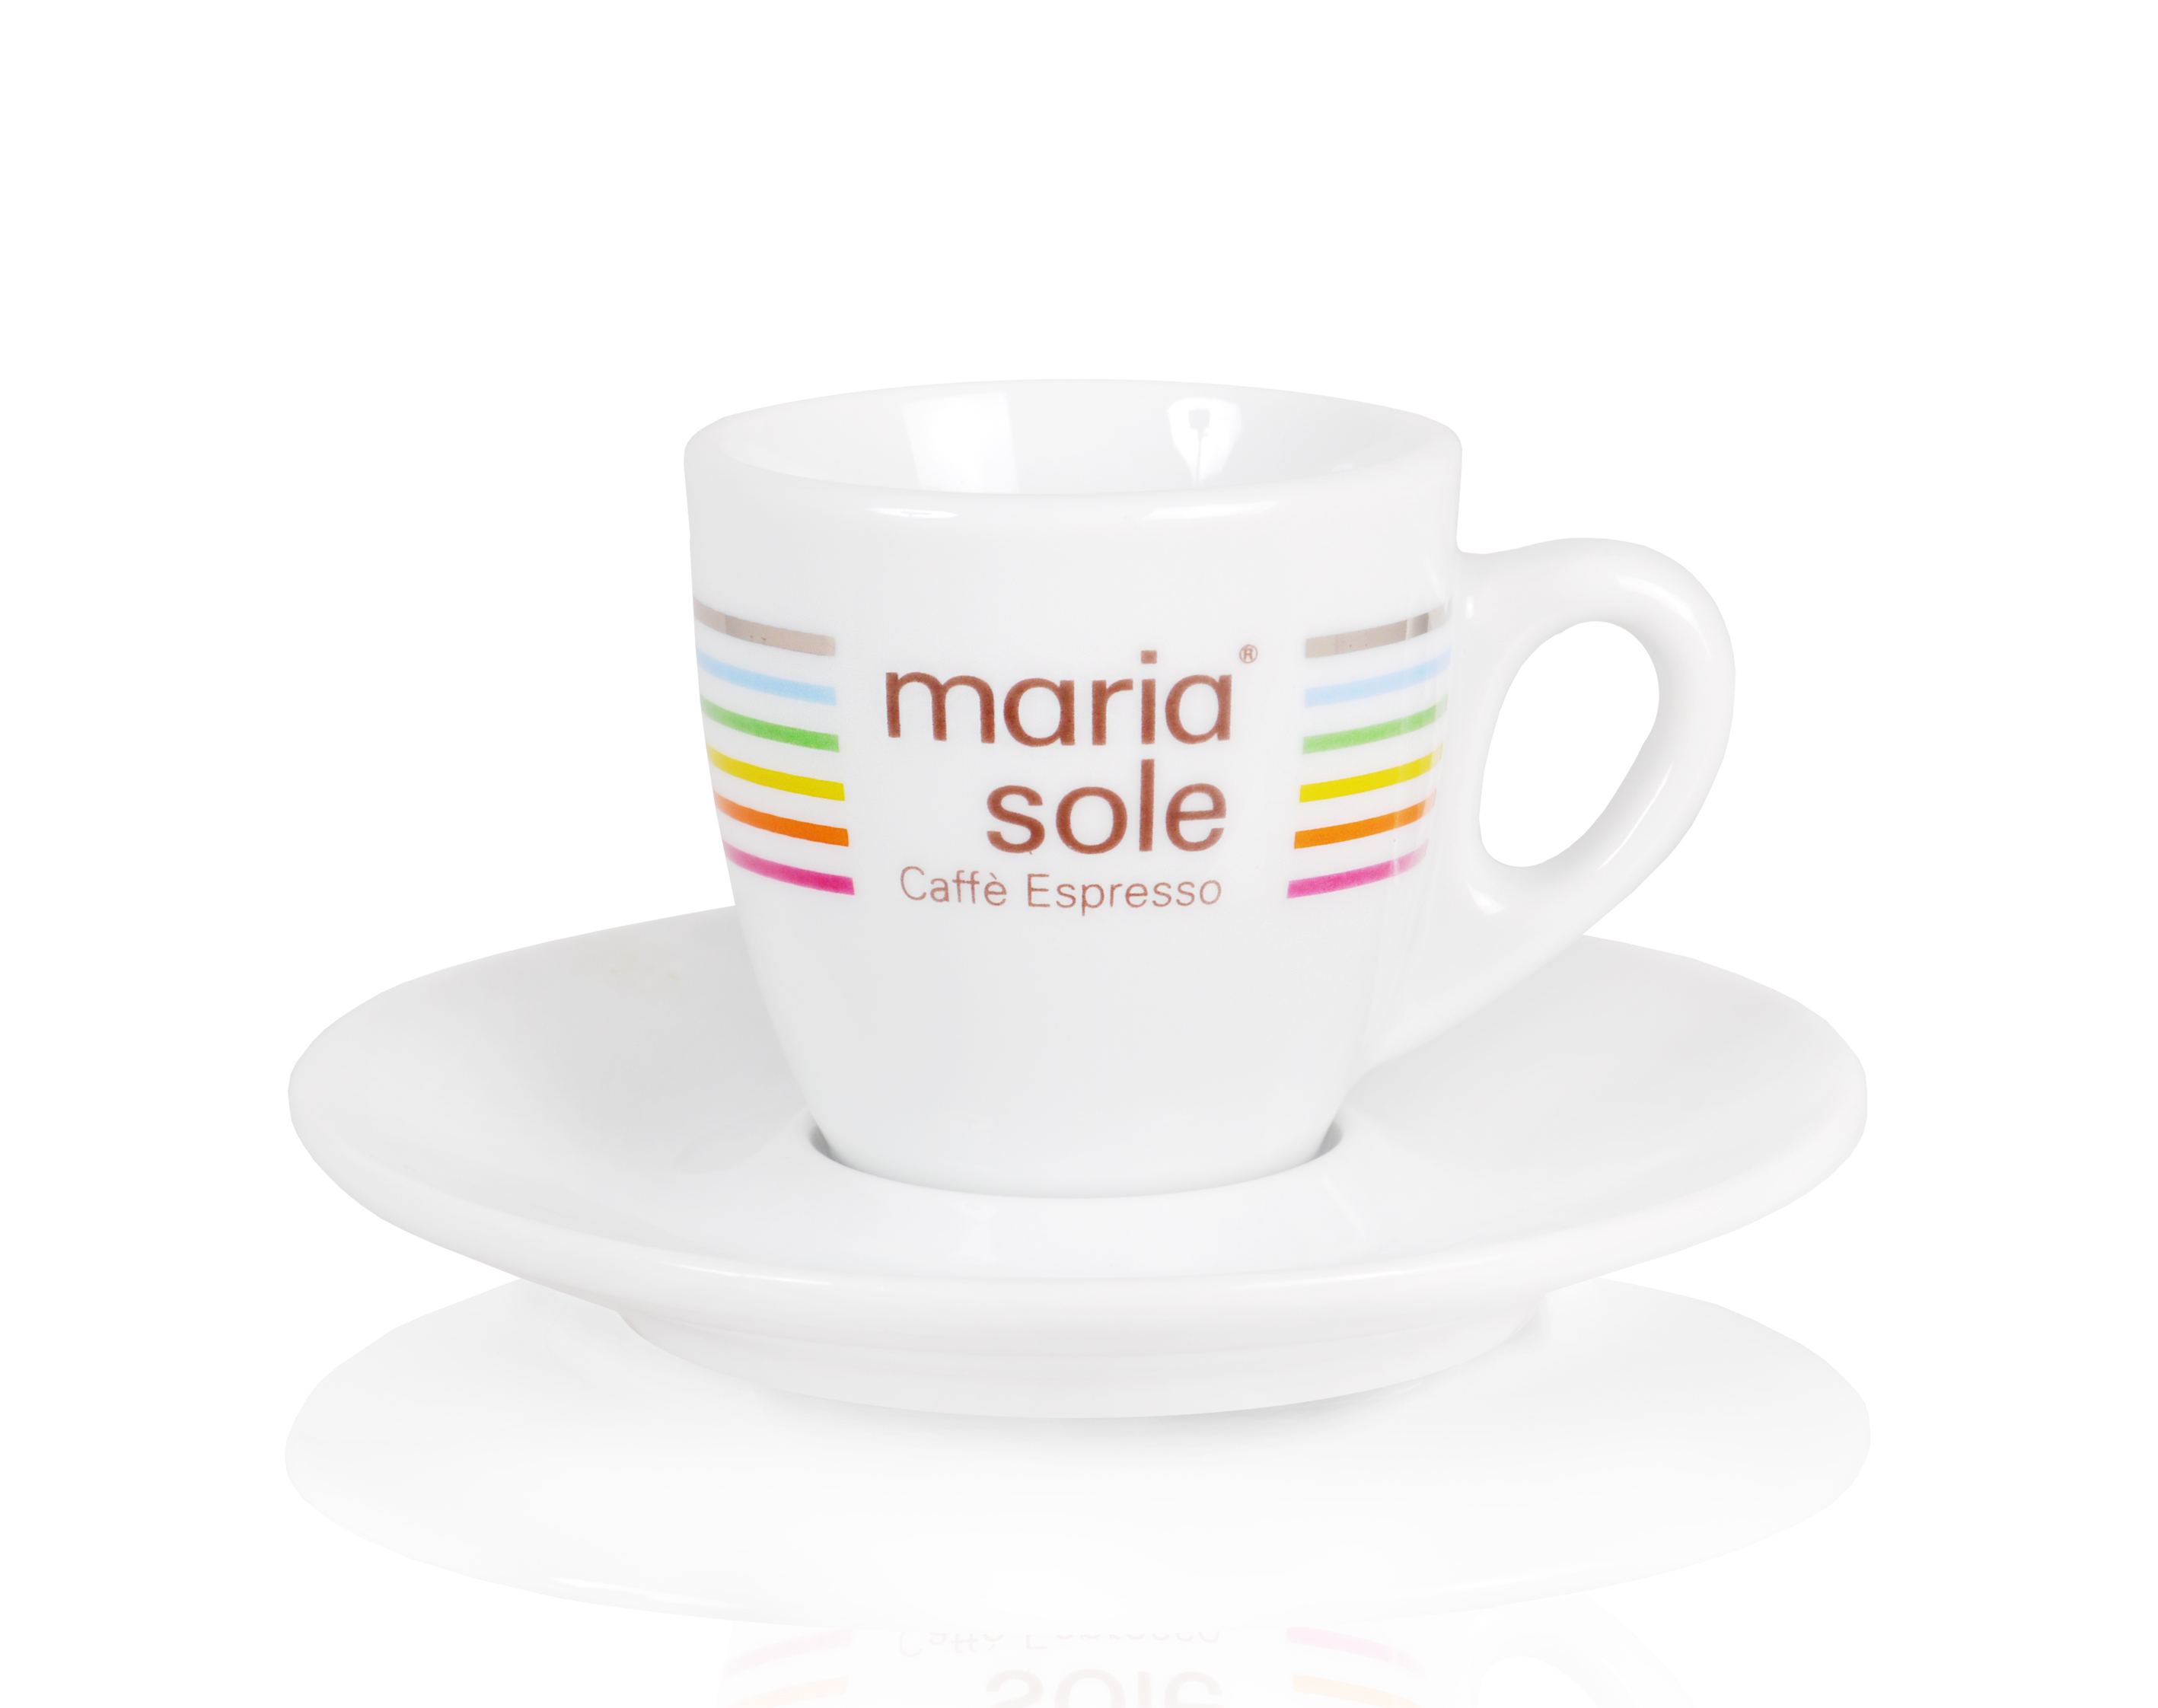 MARIASOLE & MILLE SOLI Espresso Tasse / Untertasse 